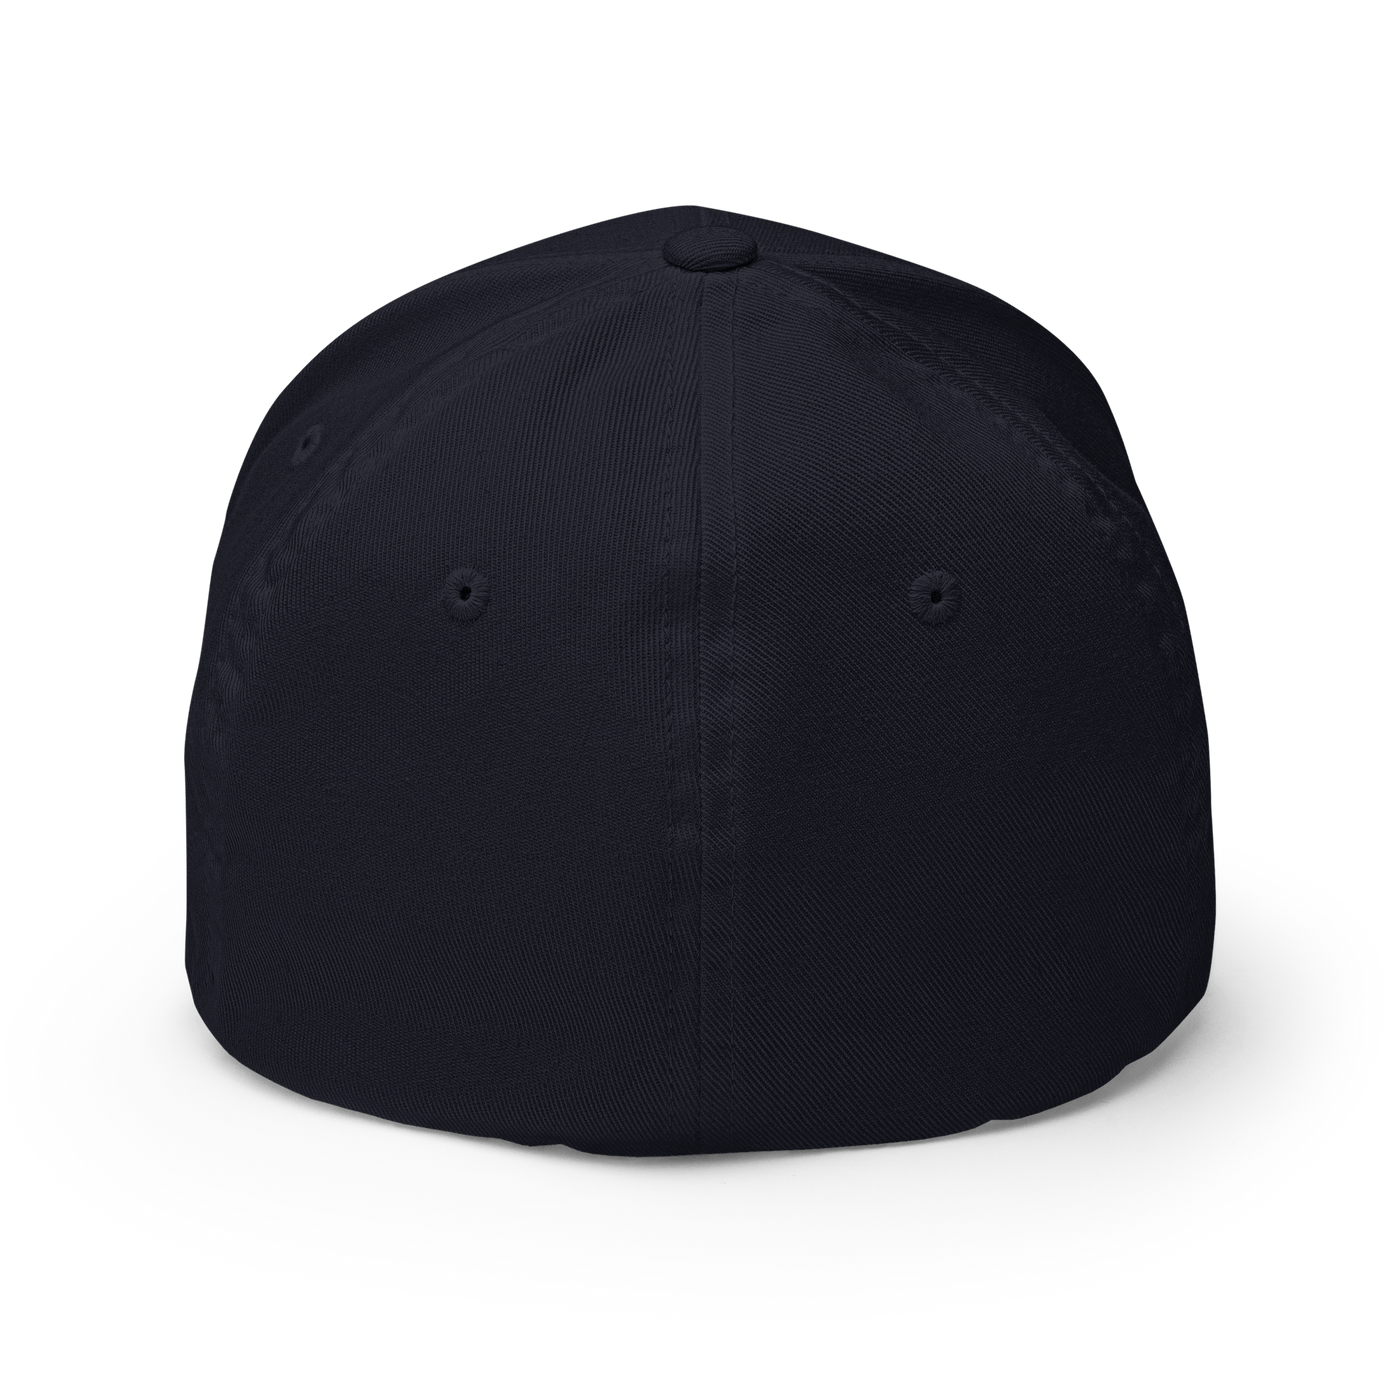 FIKA Flexfit cap - Olive - S/M - Just Another Cap Store